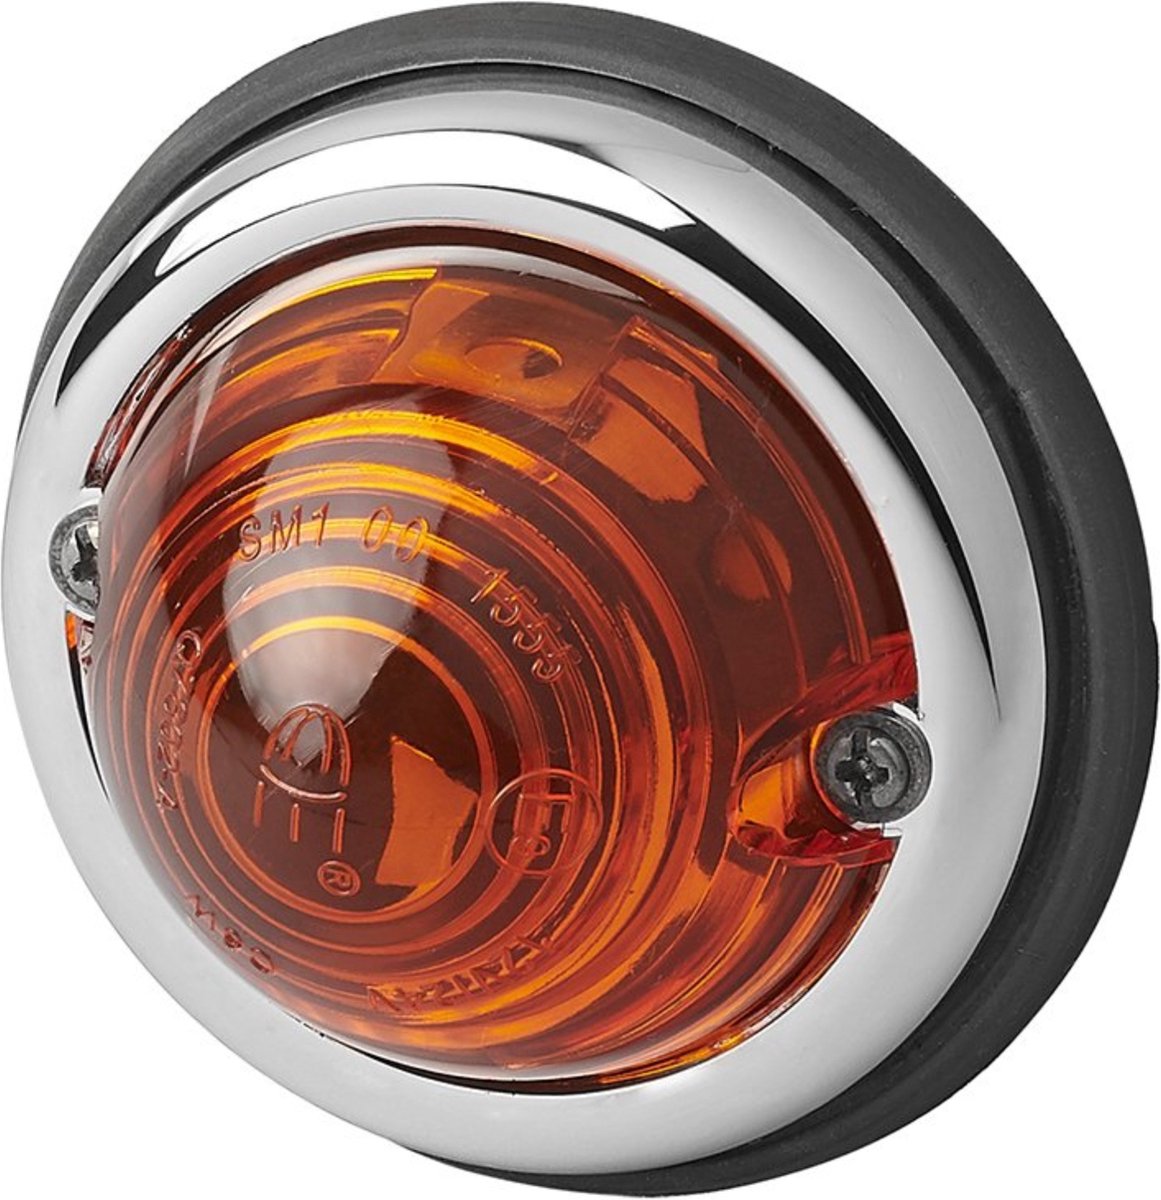 Pro Plus Markeringslamp - Zijlamp - Contourverlichting - Oranje - Ø 70 mm